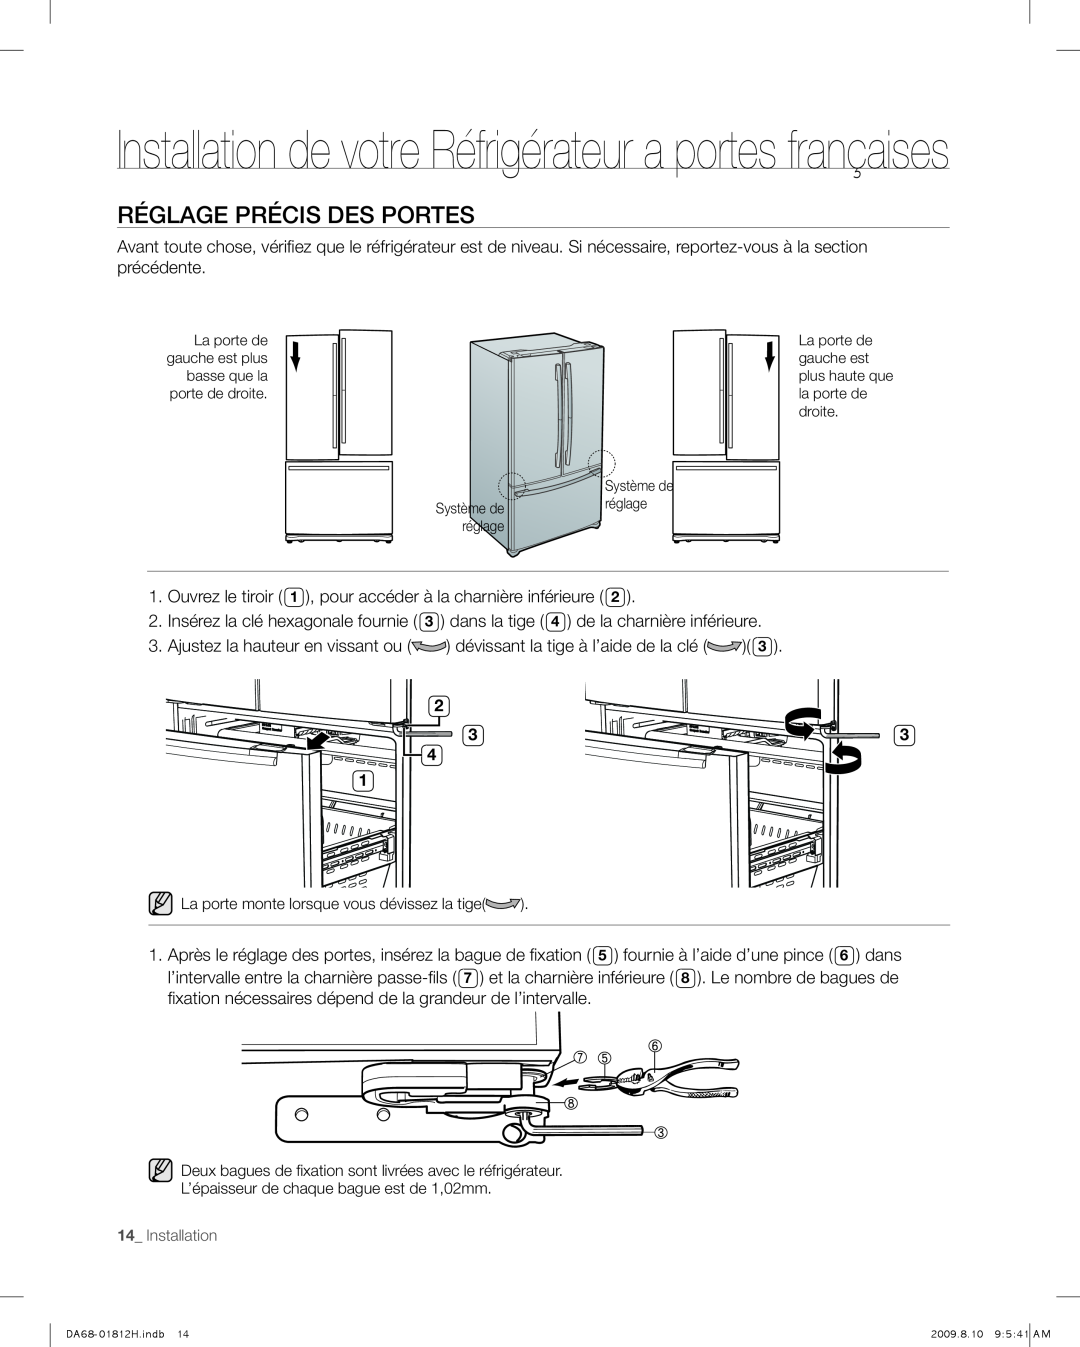 Samsung RF263 user manual Réglage Précis Des Portes, Installation 